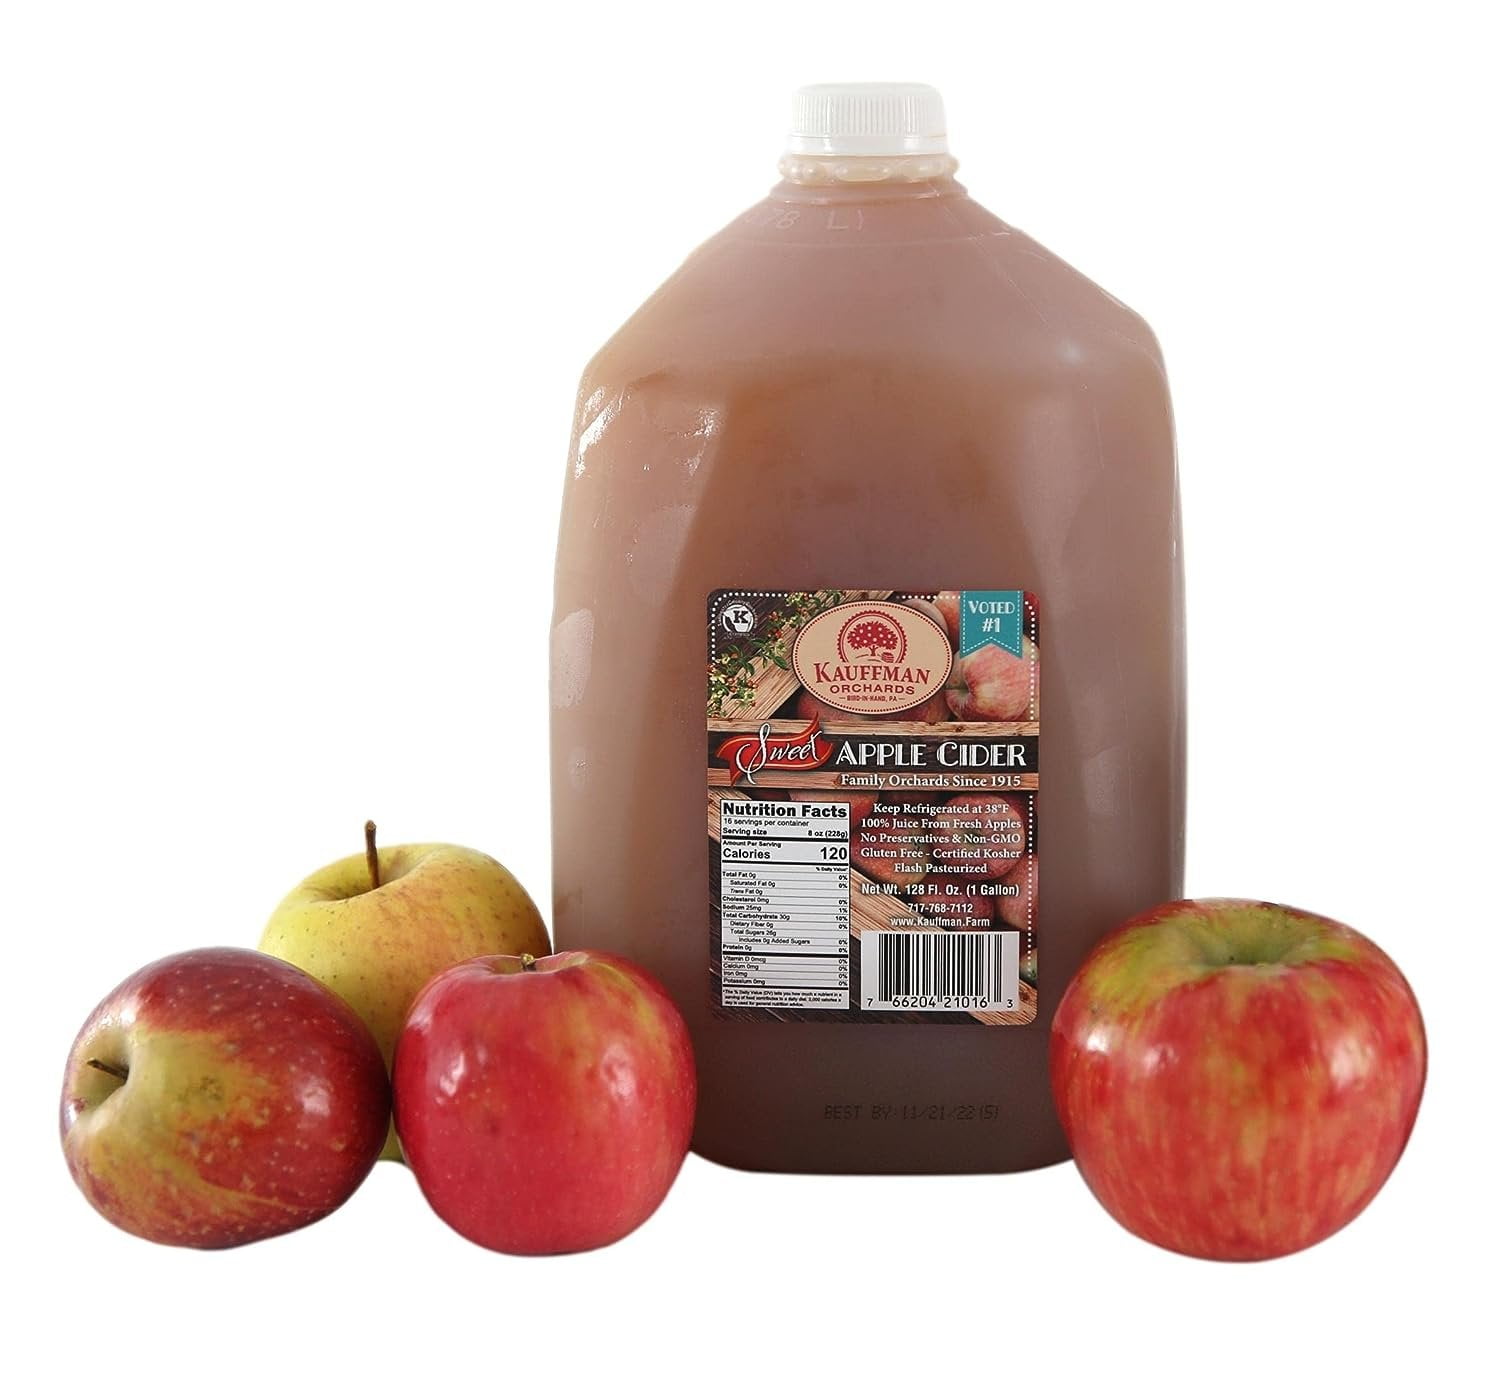 Kauffman's Fruit Farm & Market Kauffman Orchards Fresh McIntosh Apples, Hand-Picked New-Crop Wax-Free Heirloom Macintosh Apples (Box of 8)